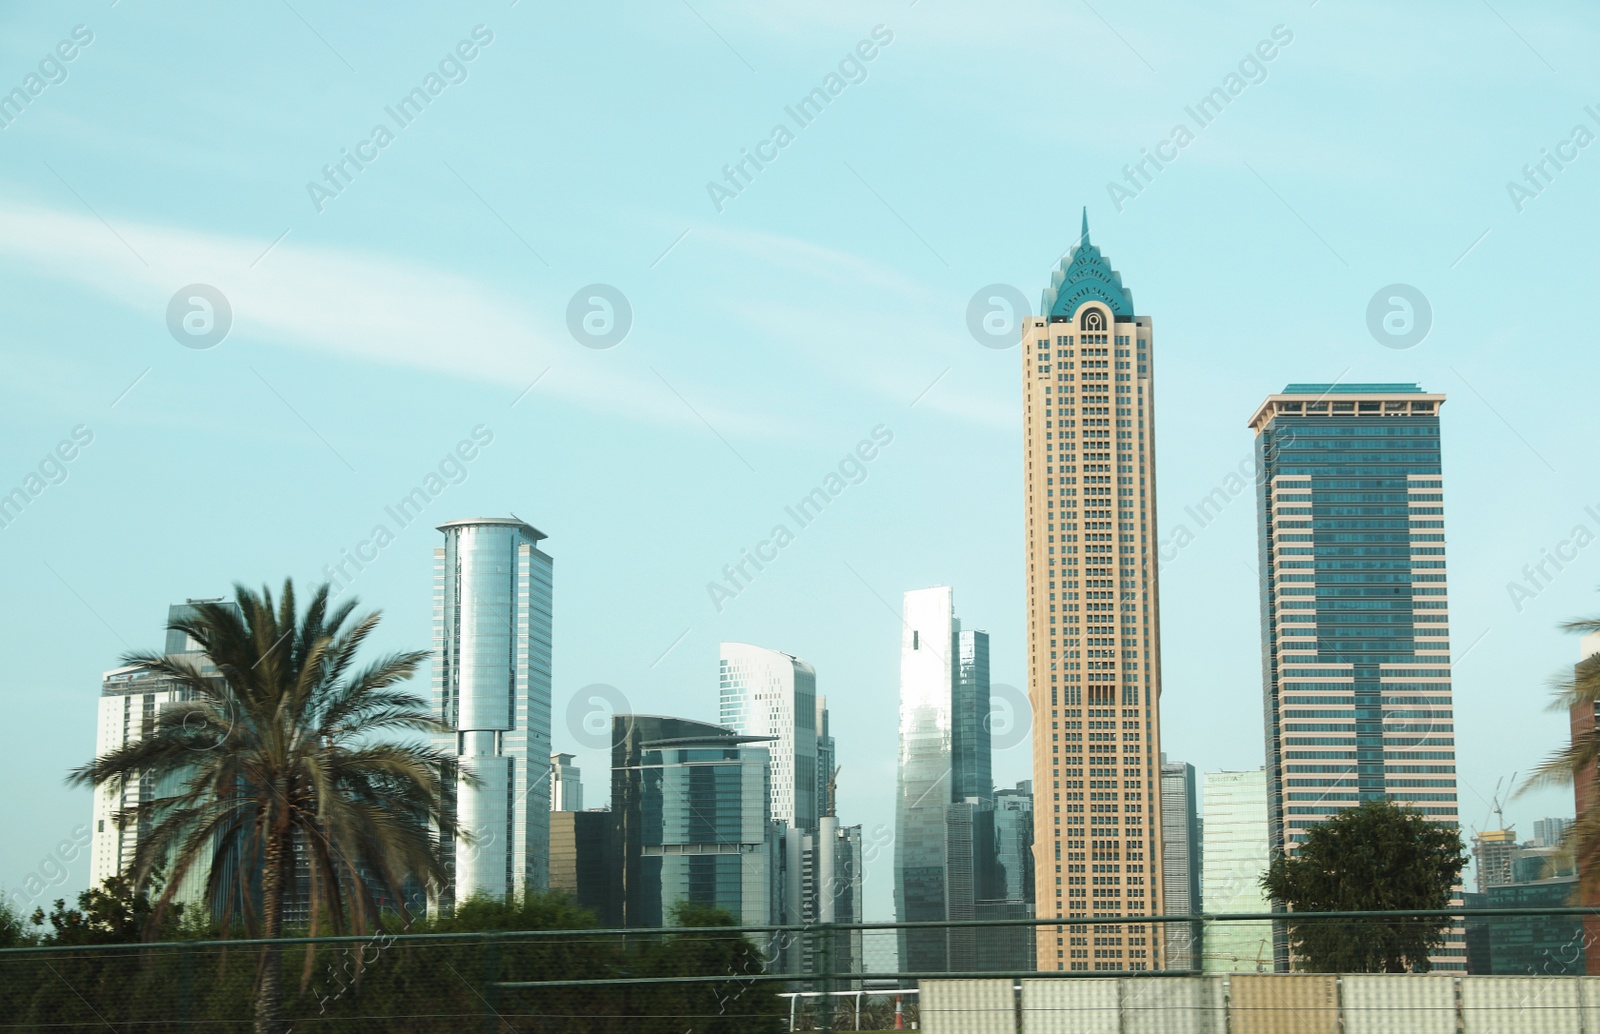 Photo of DUBAI, UNITED ARAB EMIRATES - NOVEMBER 03, 2018: Landscape with different hotels on sunny day